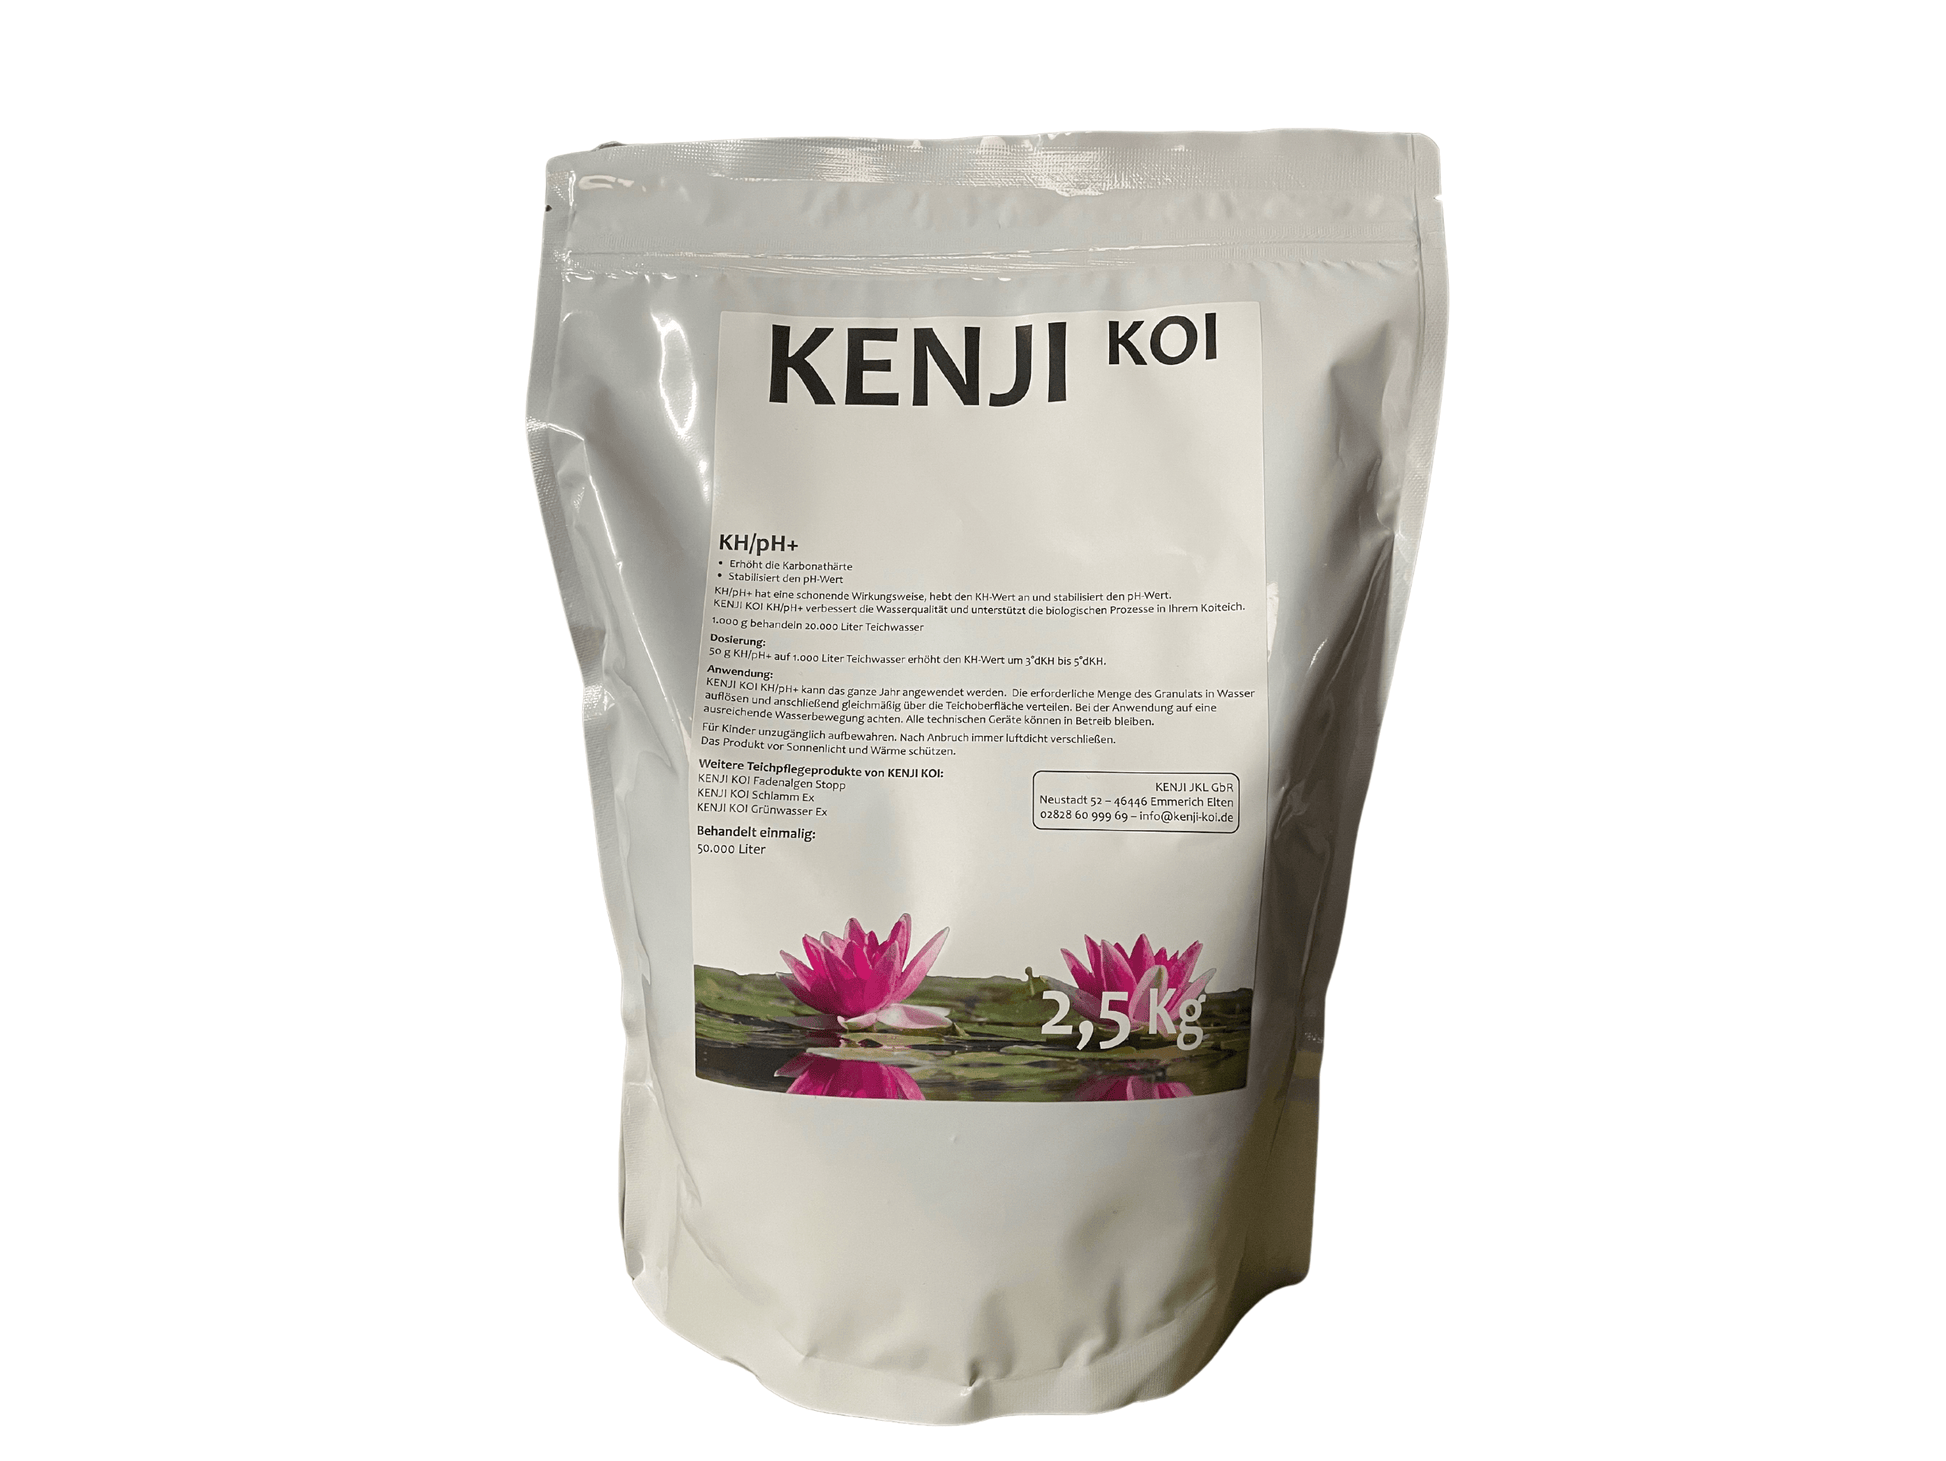 KENJI KOI KH/pH+ 5kg - KENJI KOI Products